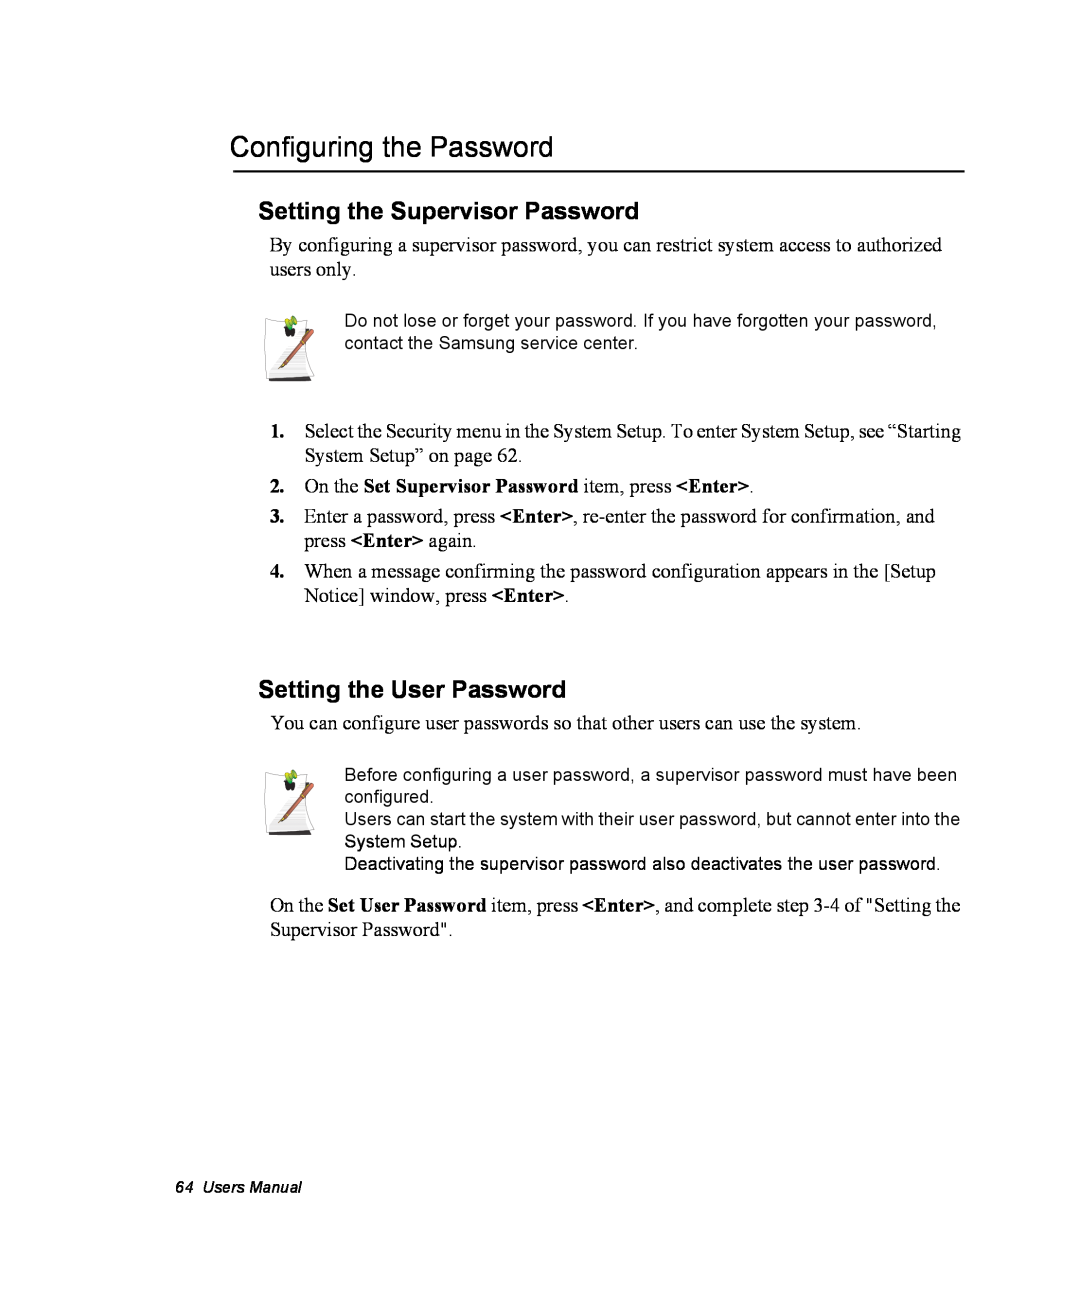 Samsung NM40PRDV03/SEF manual Configuring the Password, Setting the Supervisor Password, Setting the User Password 